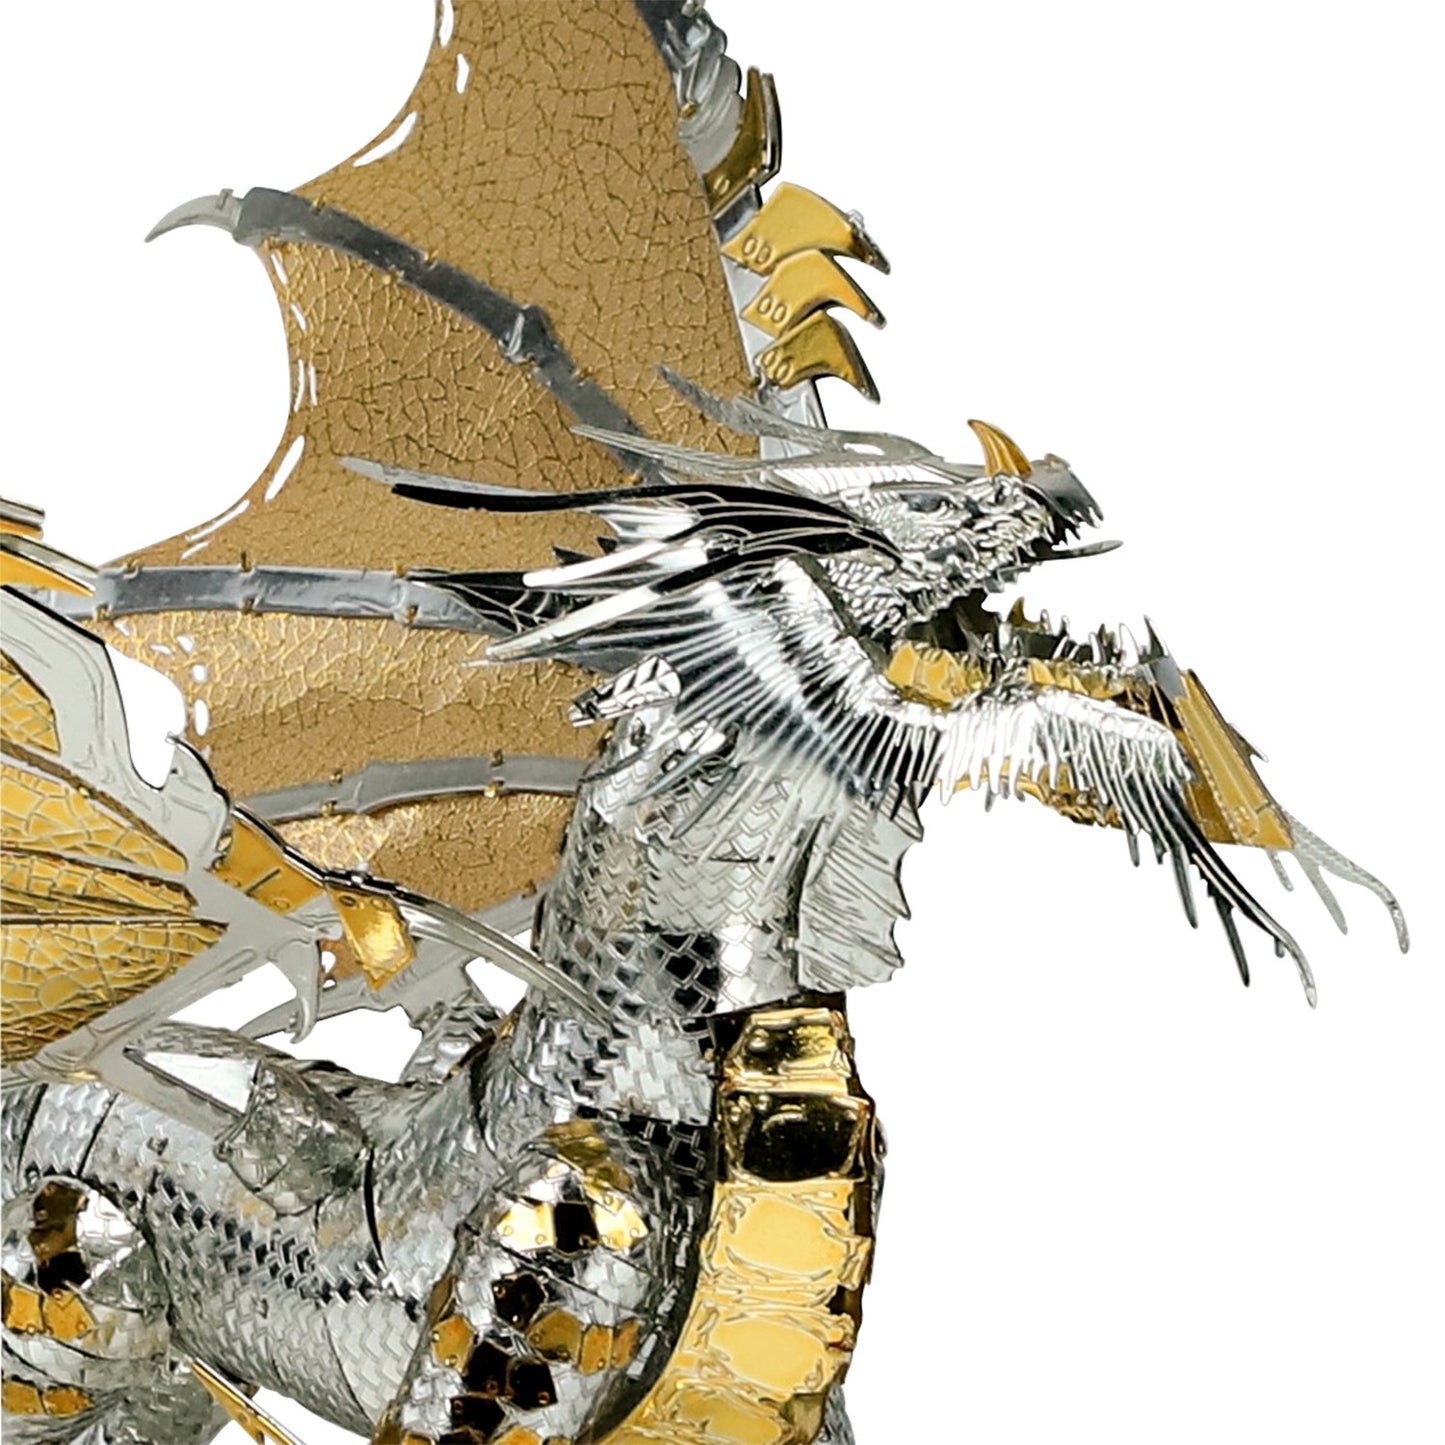 Glorystorm Dragon 3D Metal Jigsaw Puzzle